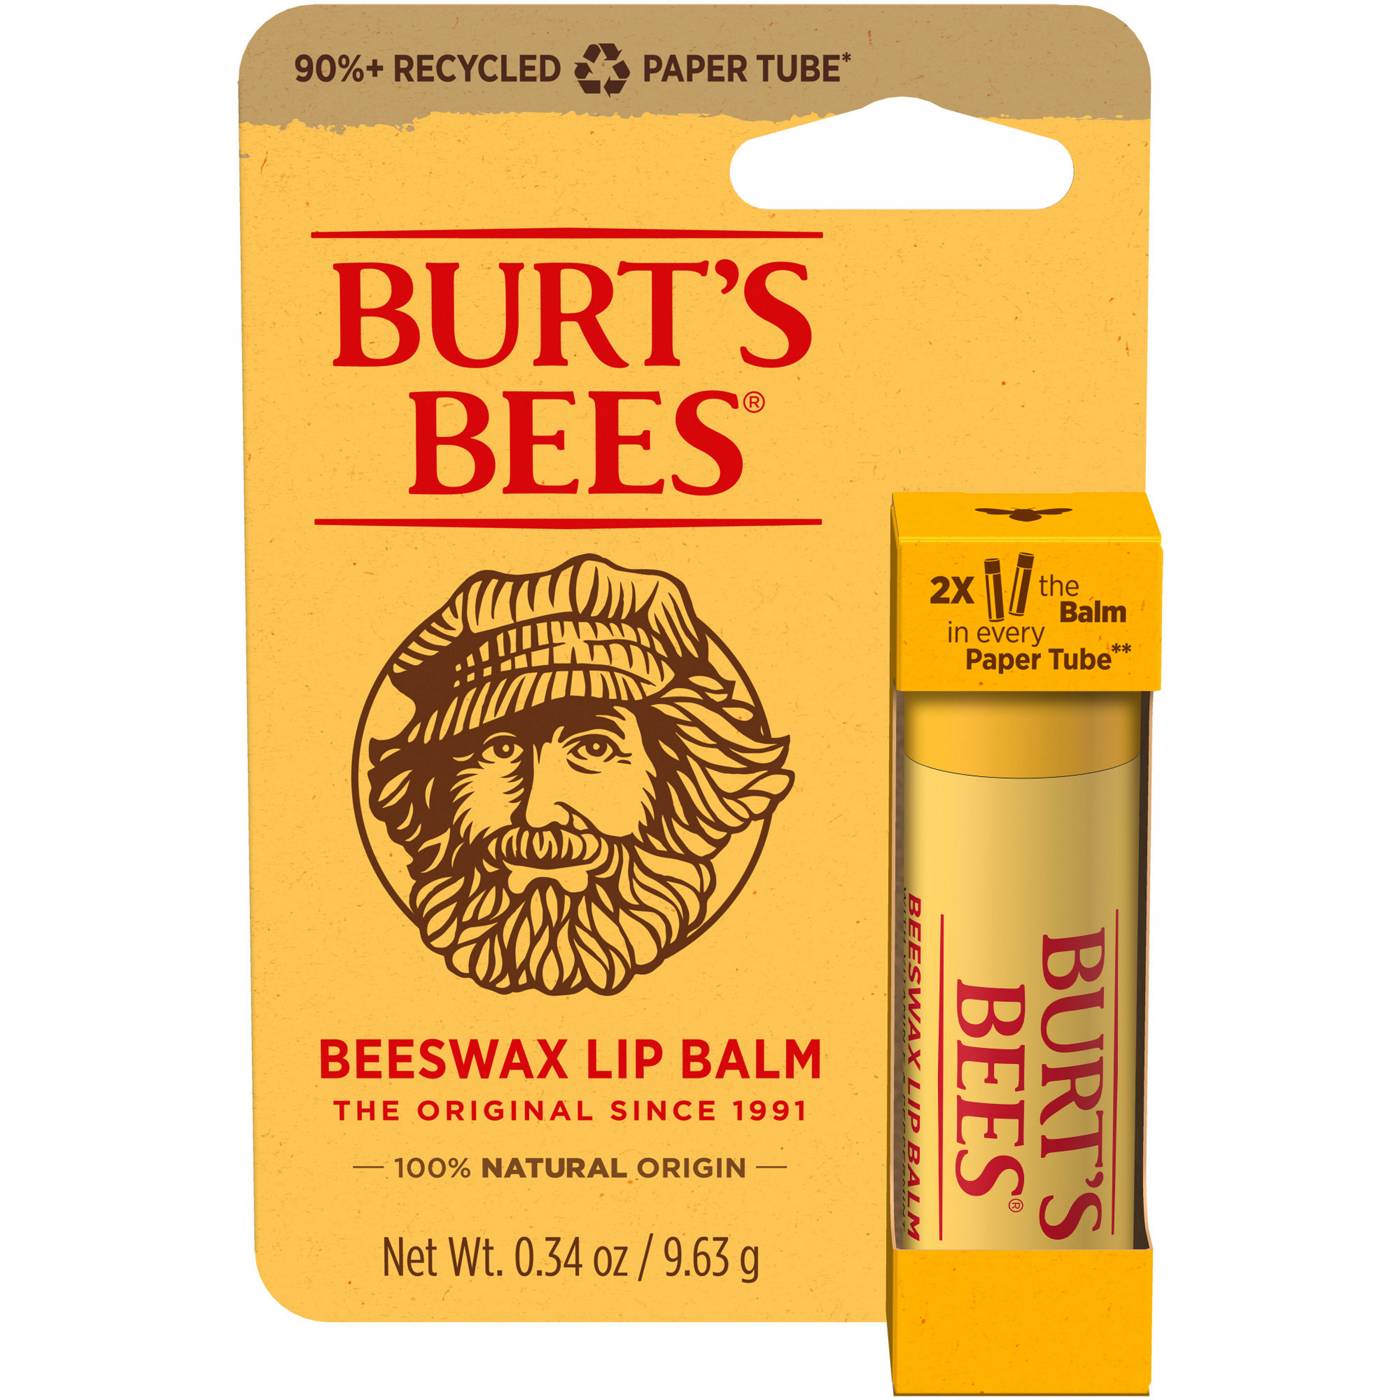 Burt's Bees Beeswax Lip Balm; image 1 of 9